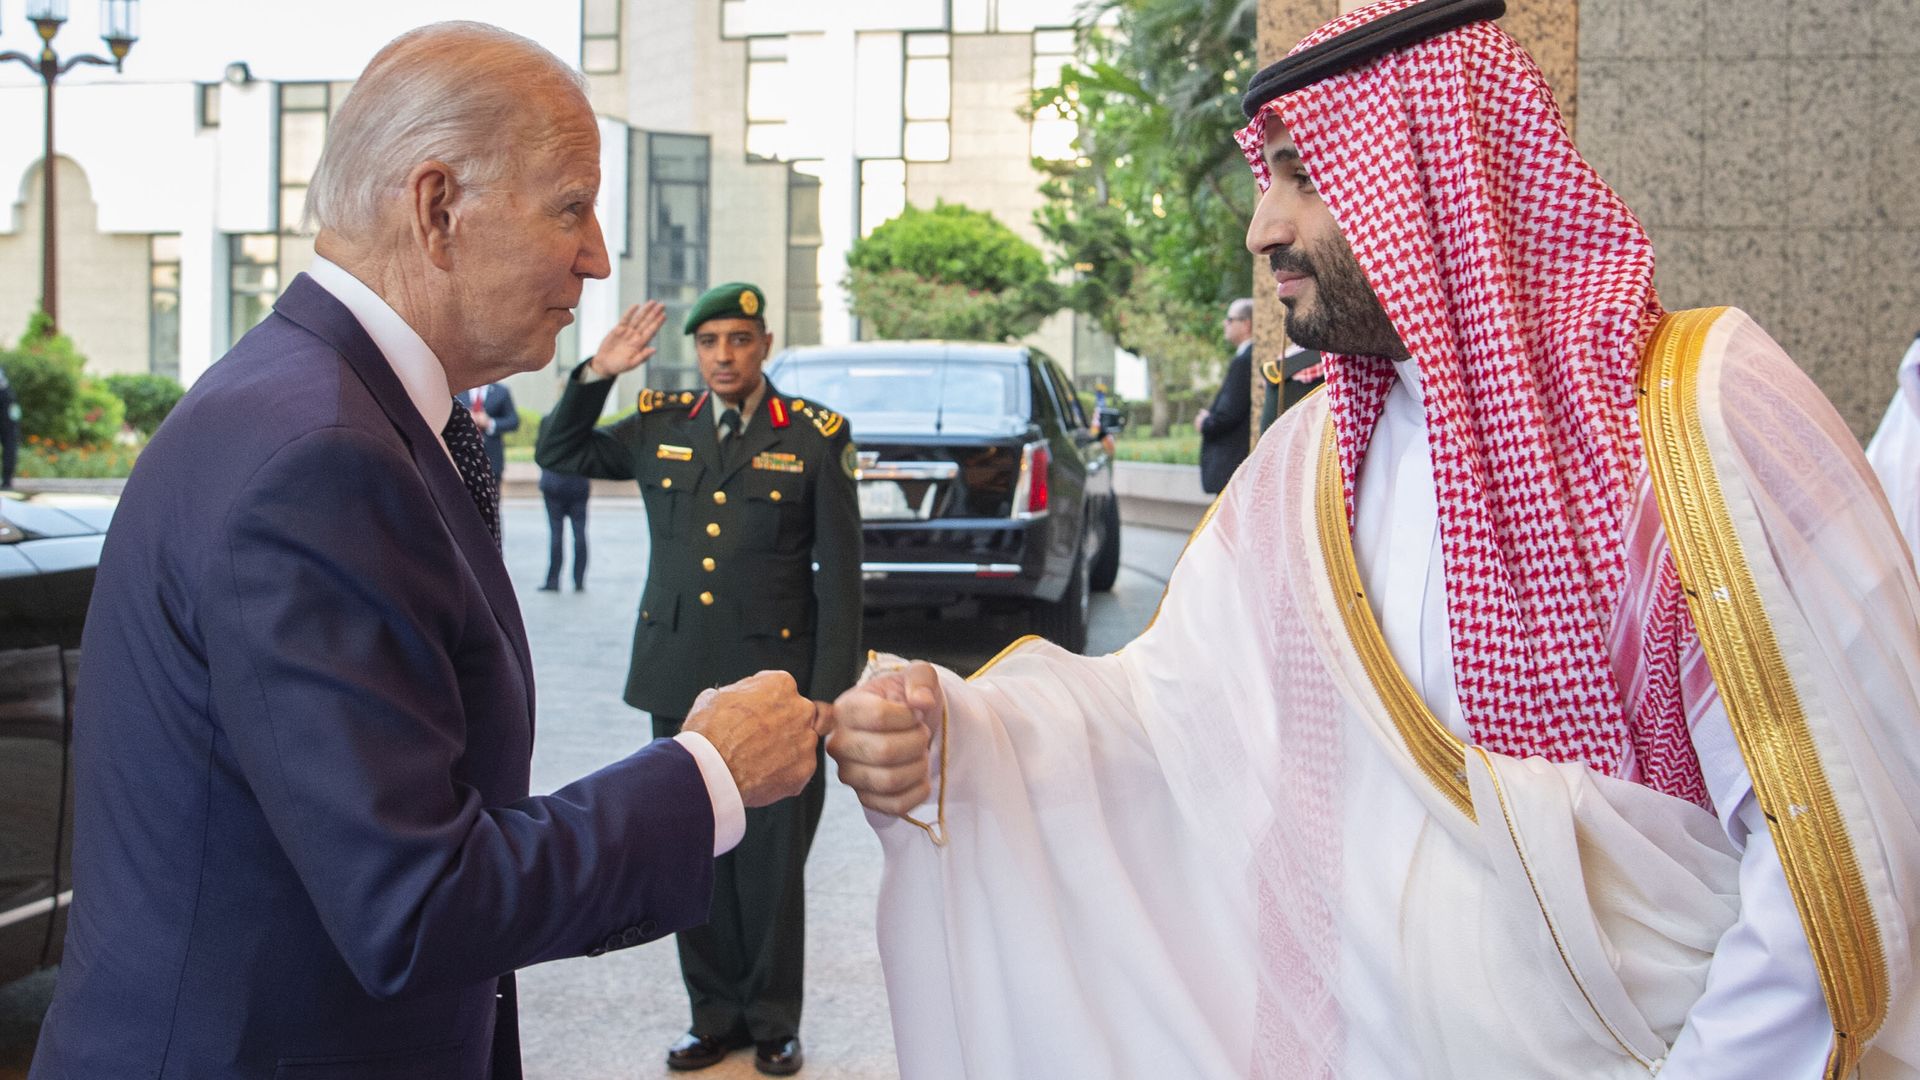 Biden fist bumps Saudi Crown Prince Mohammed bin Salman. Photo: Royal Court of Saudi Arabia /Handout/Anadolu Agency via Getty Images